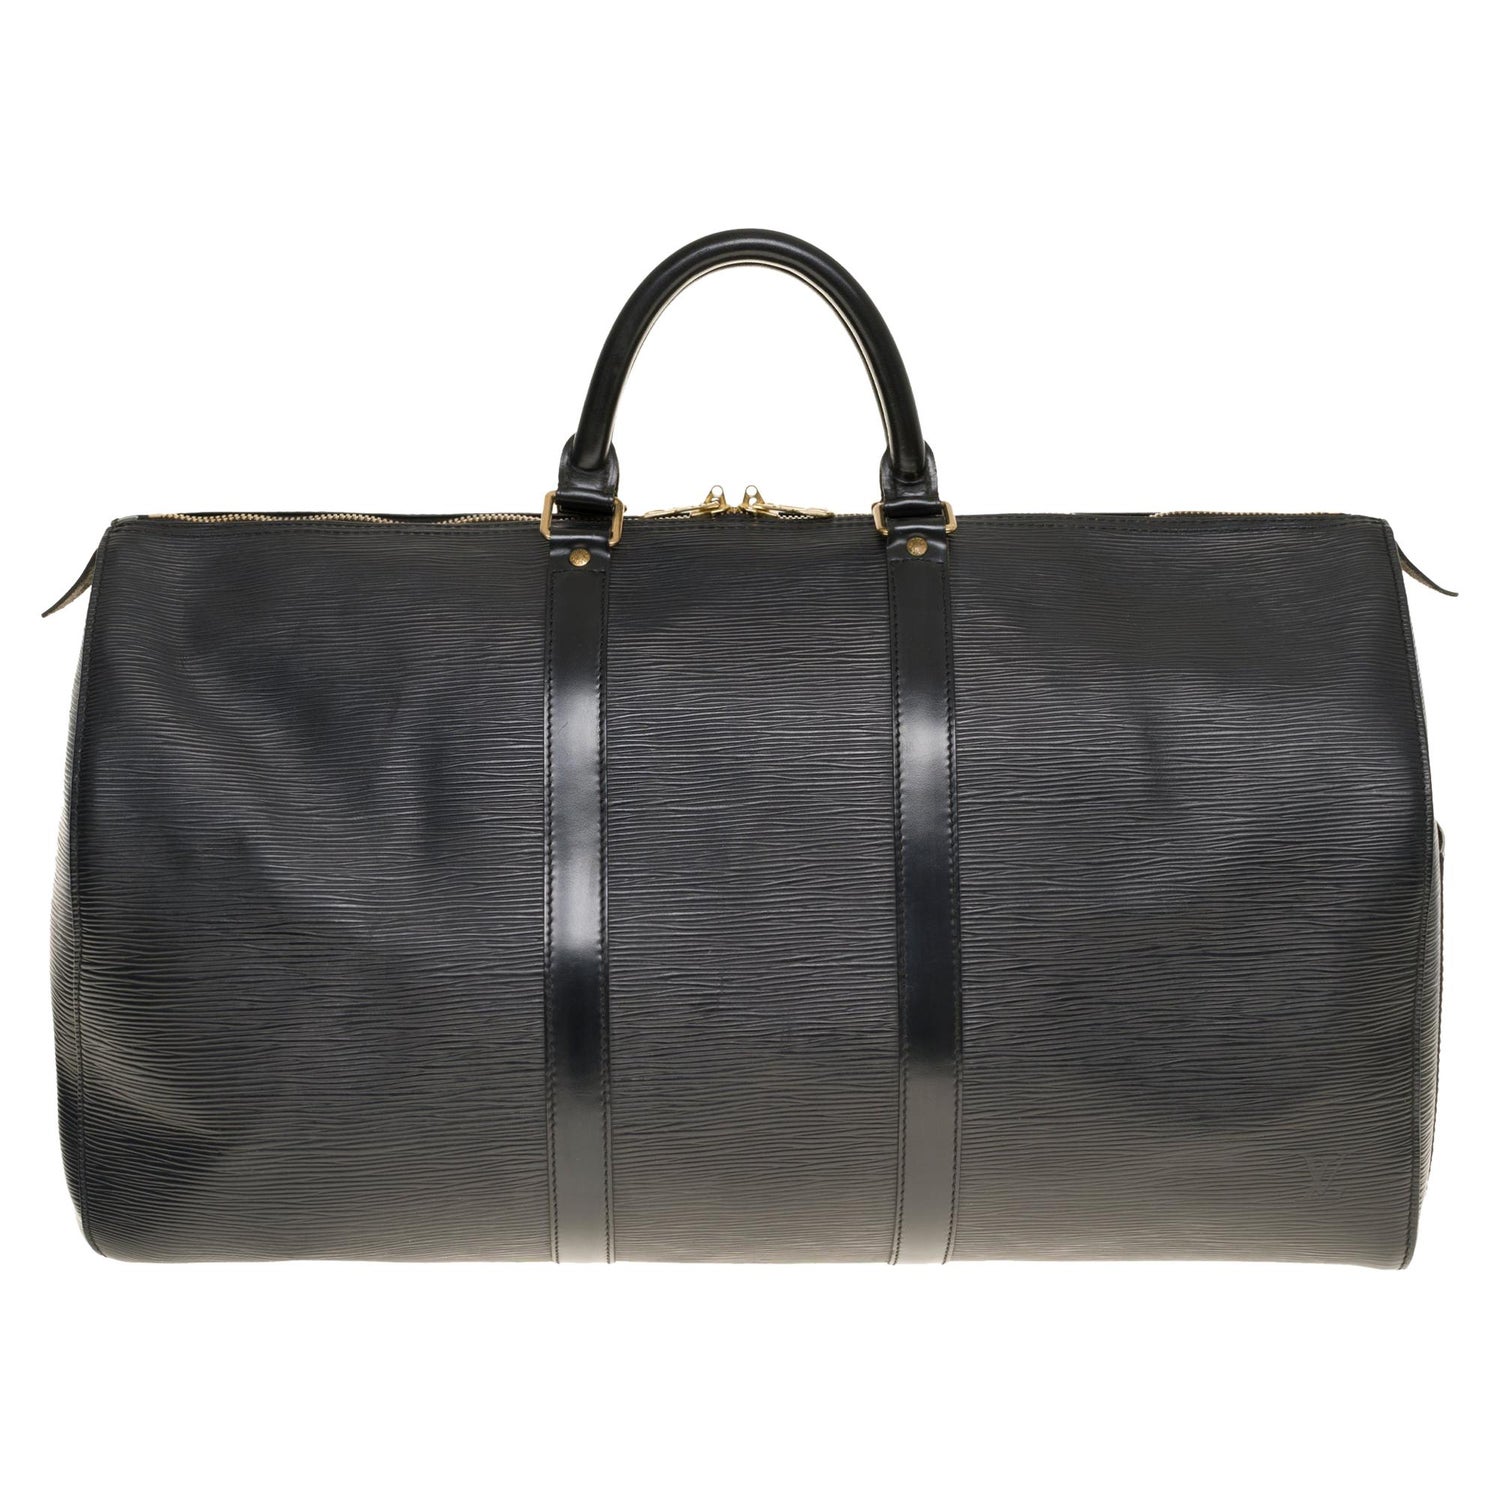 Louis Vuitton Punching Bag, Boxing Gloves, Matt and Case Est. $10,000